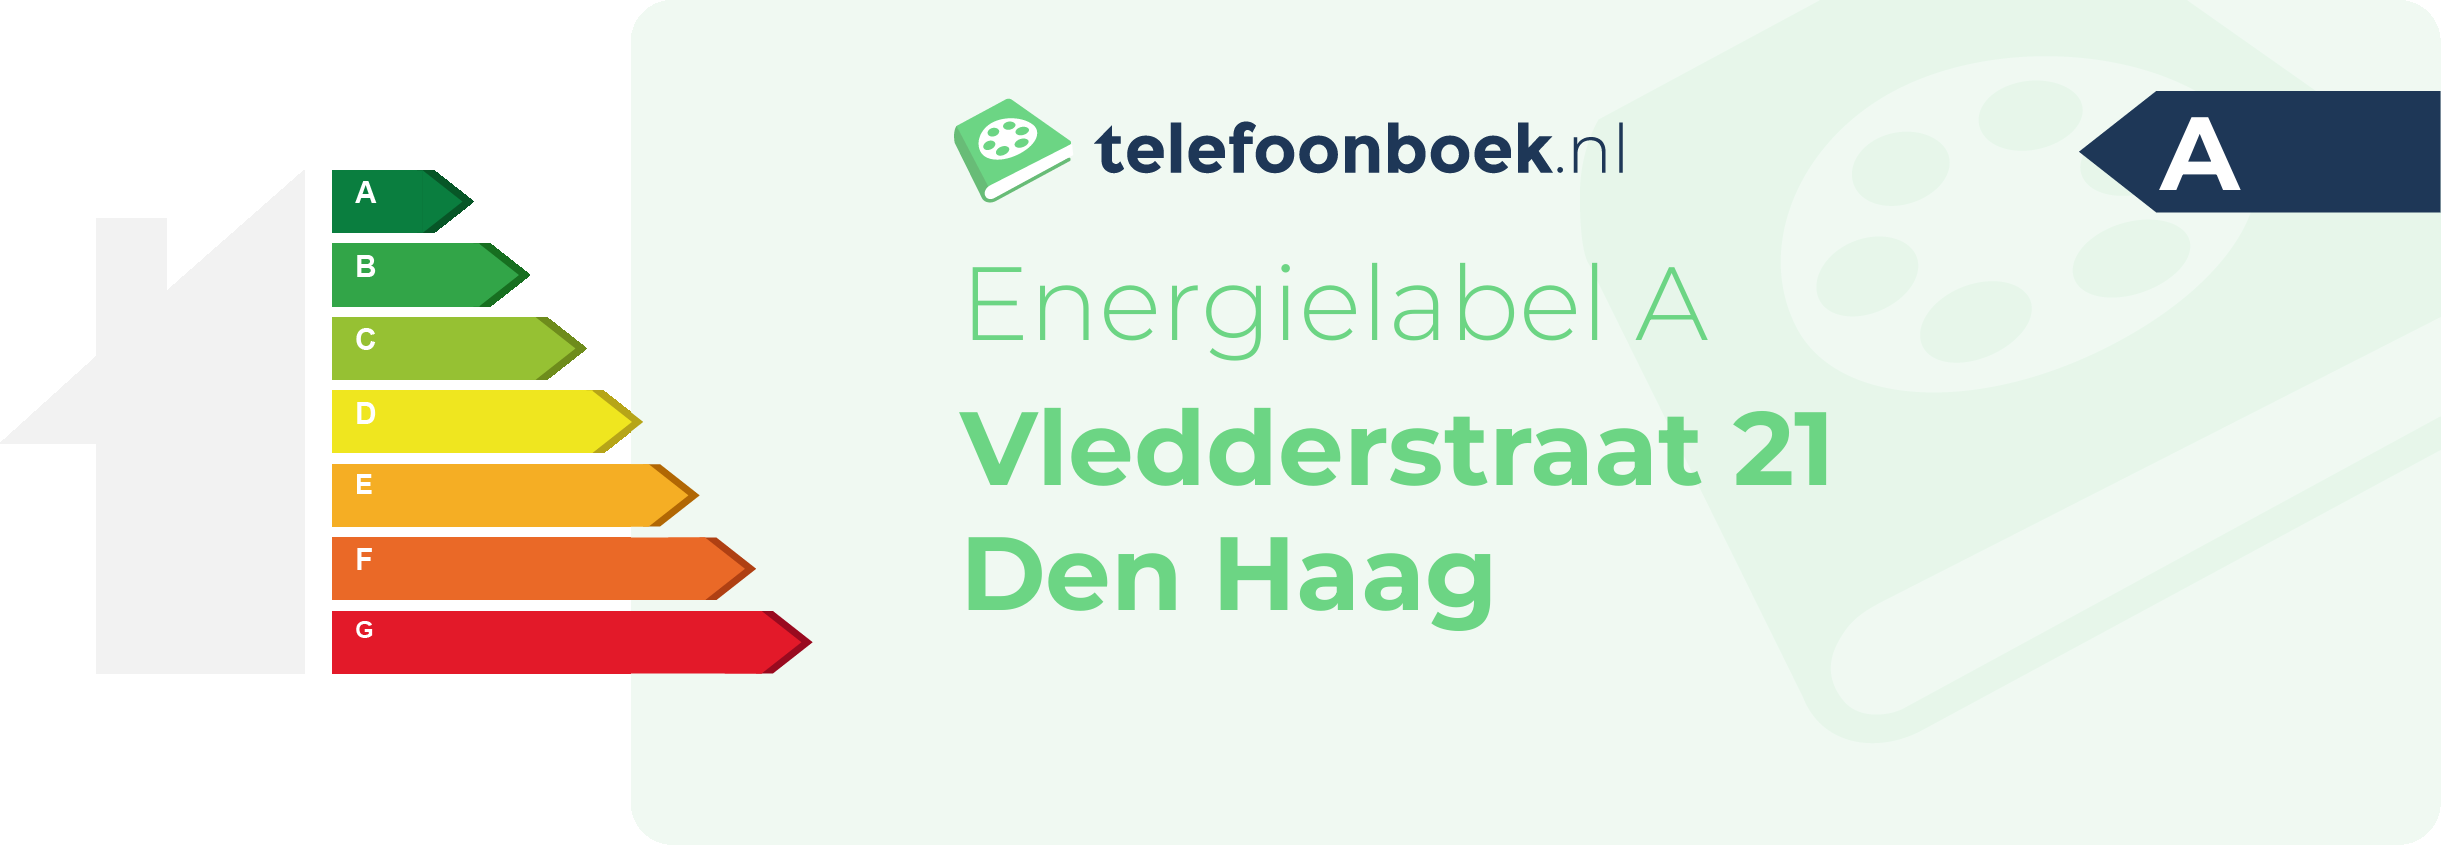 Energielabel Vledderstraat 21 Den Haag